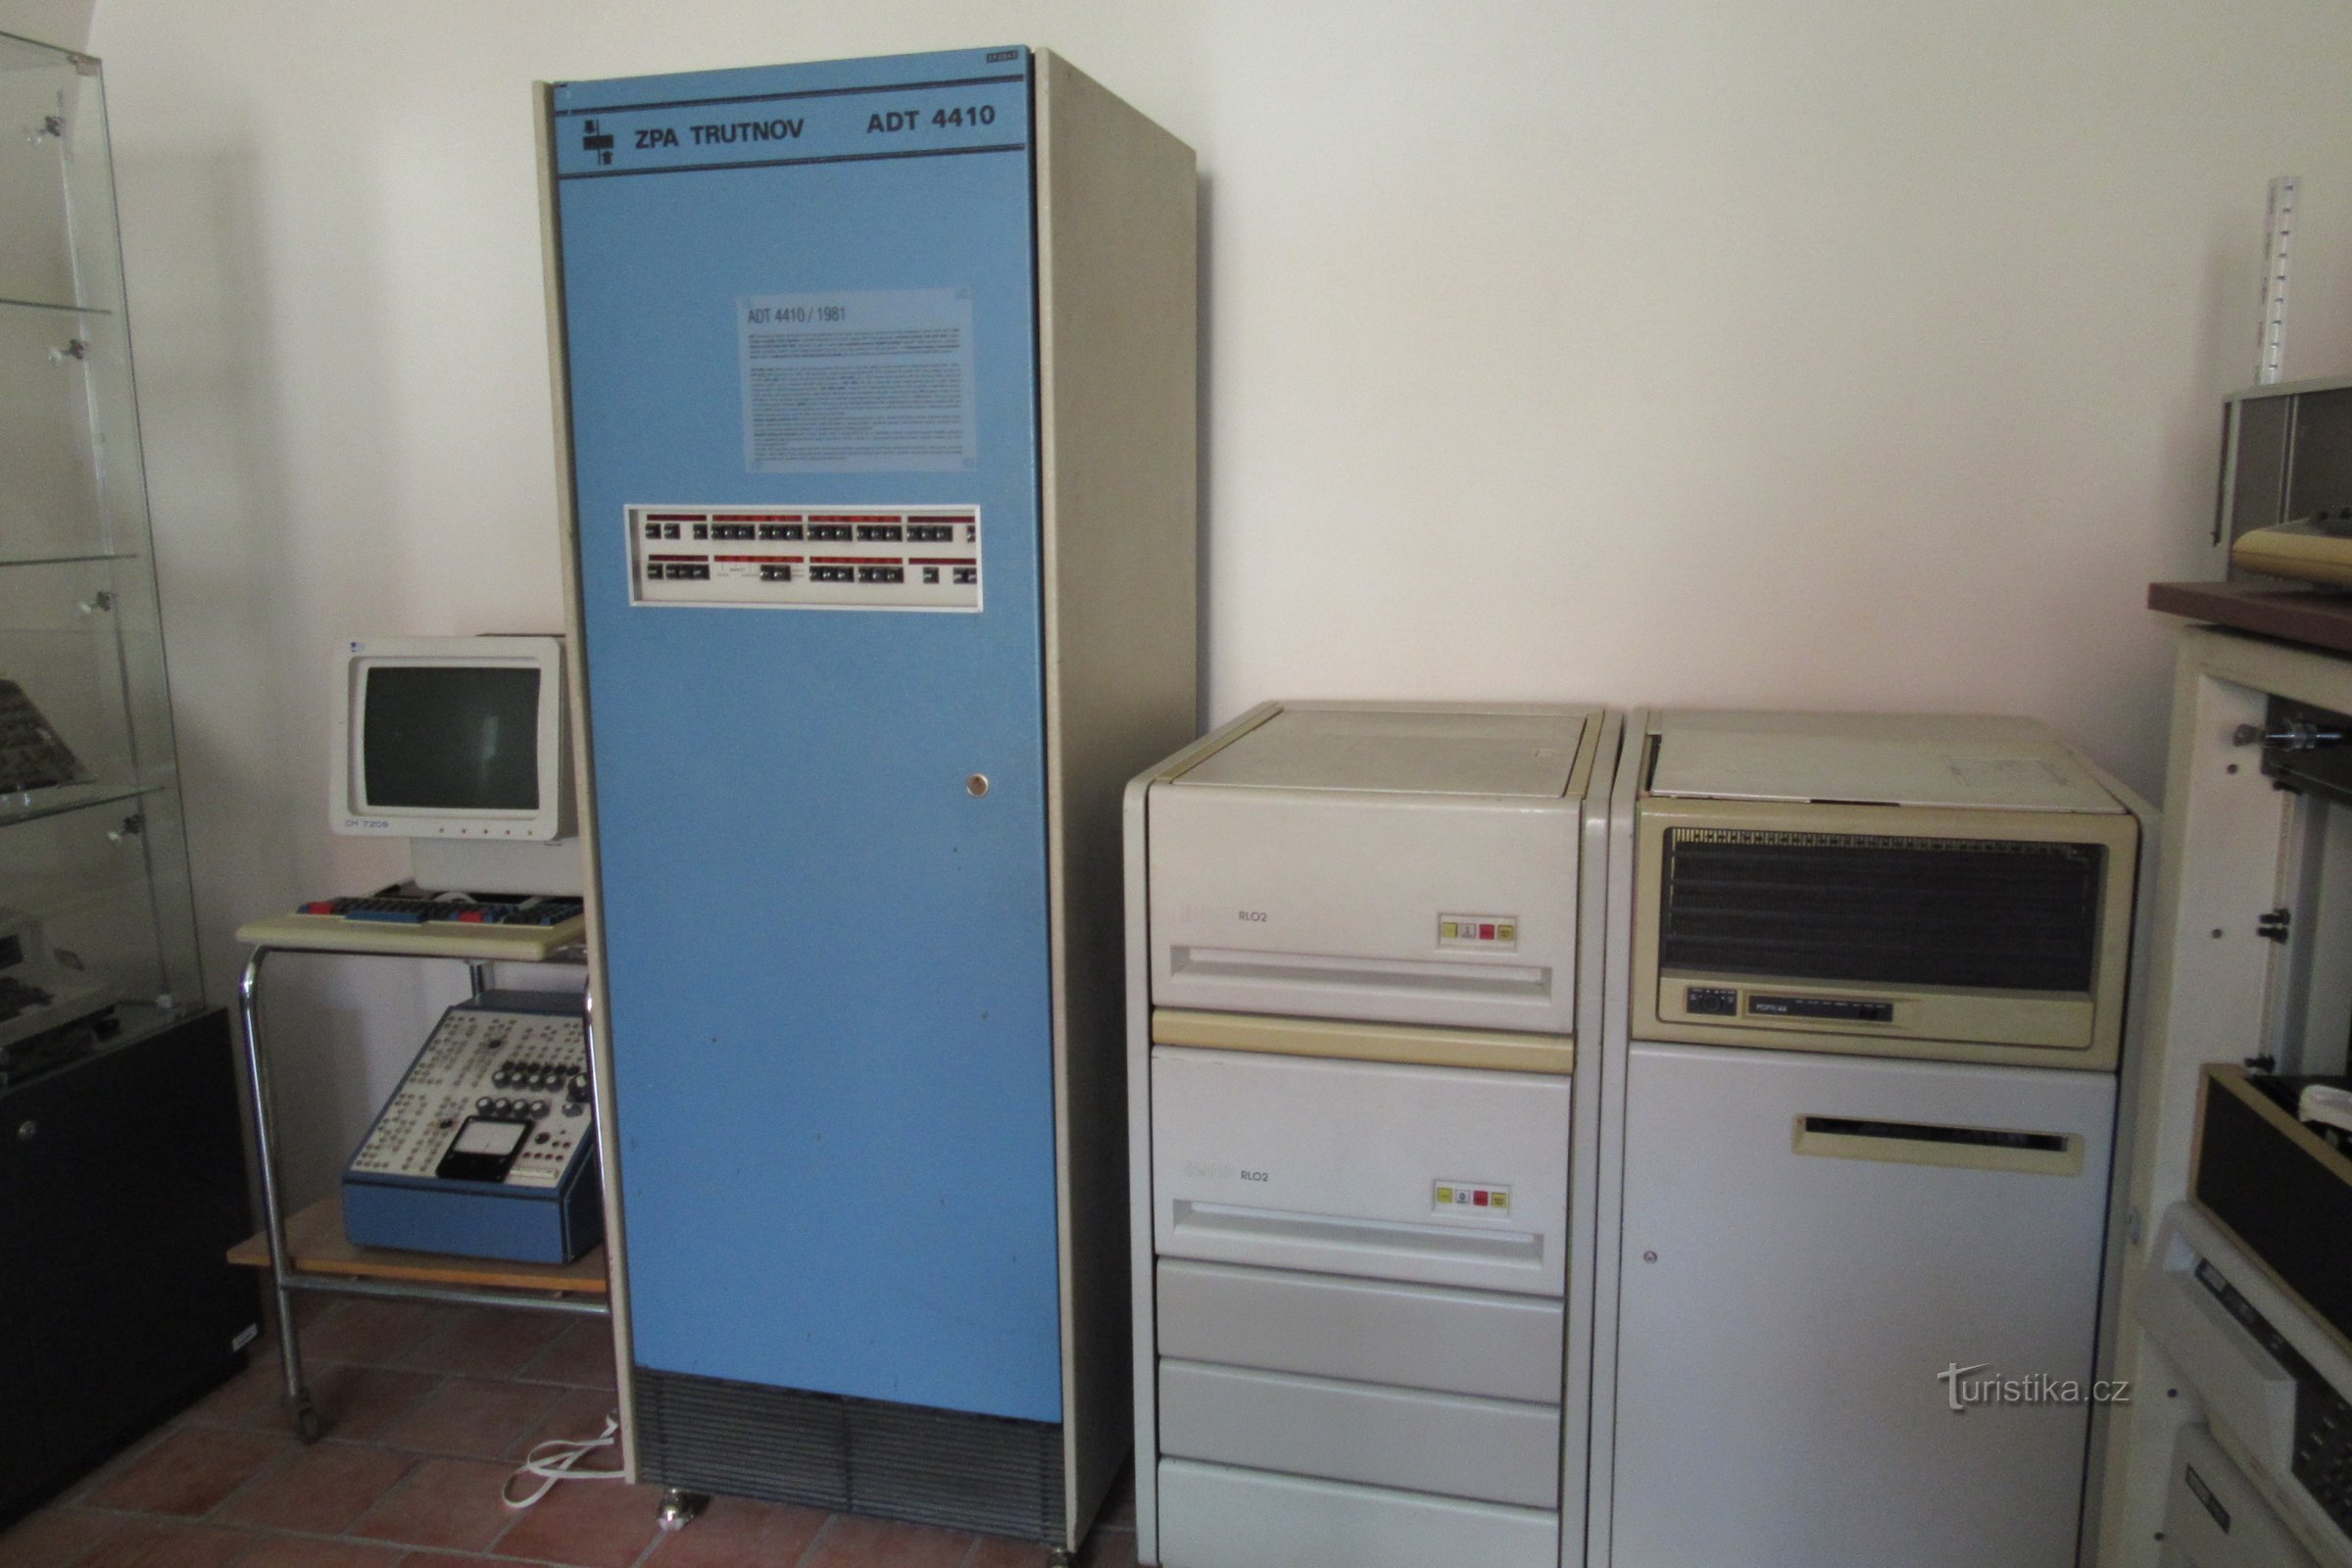 Sistem informatic ADT 4410